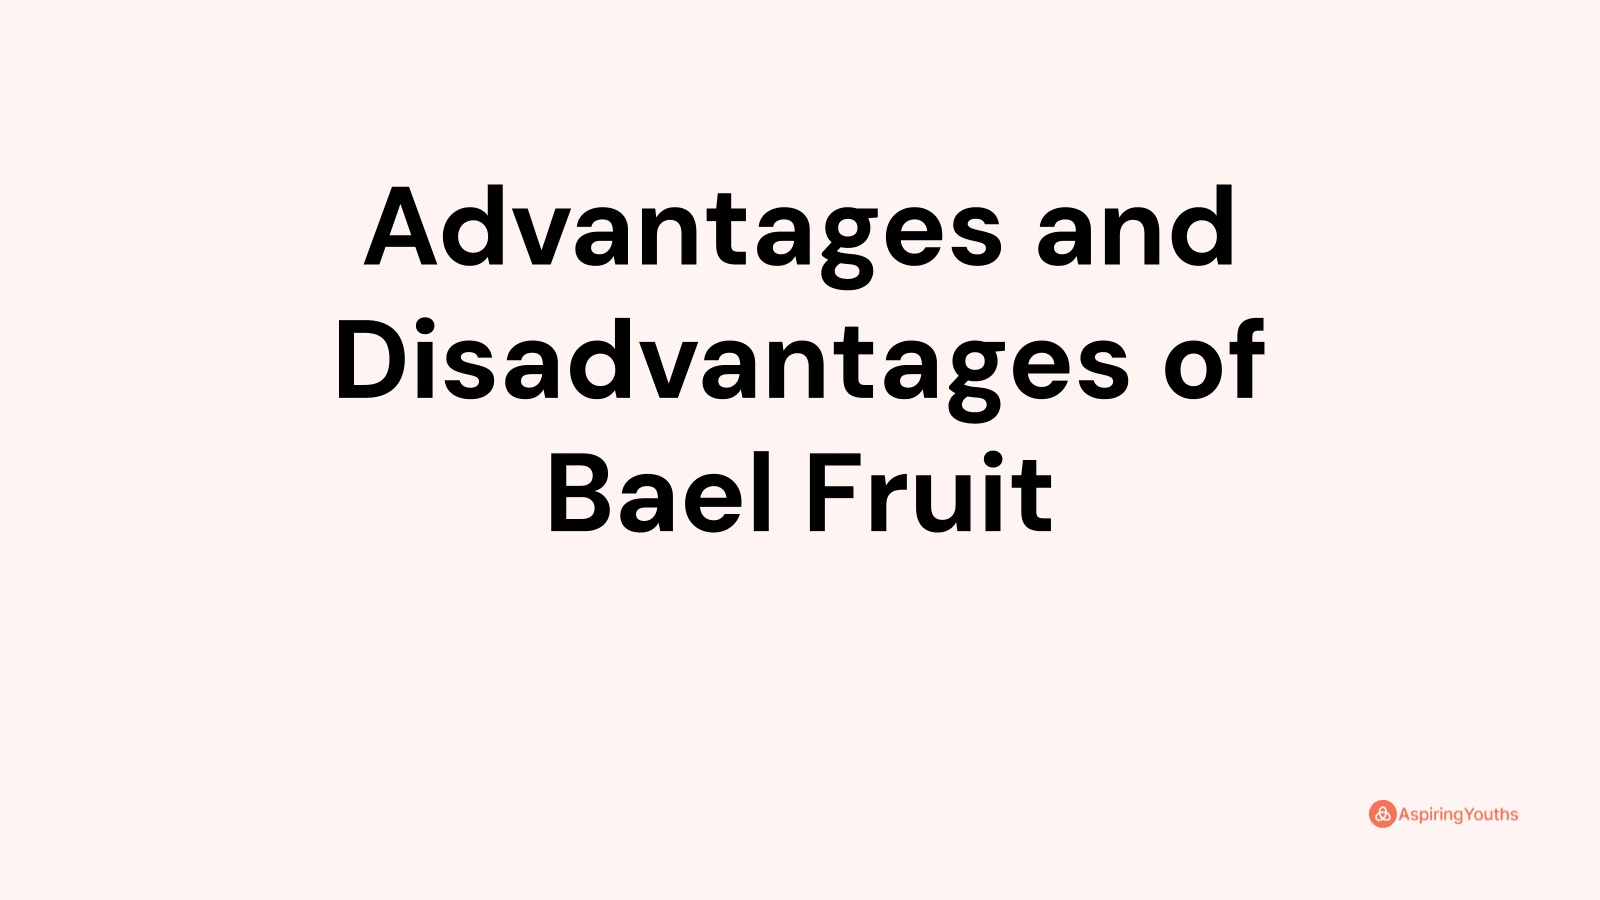 Advantages and disadvantages of Bael Fruit